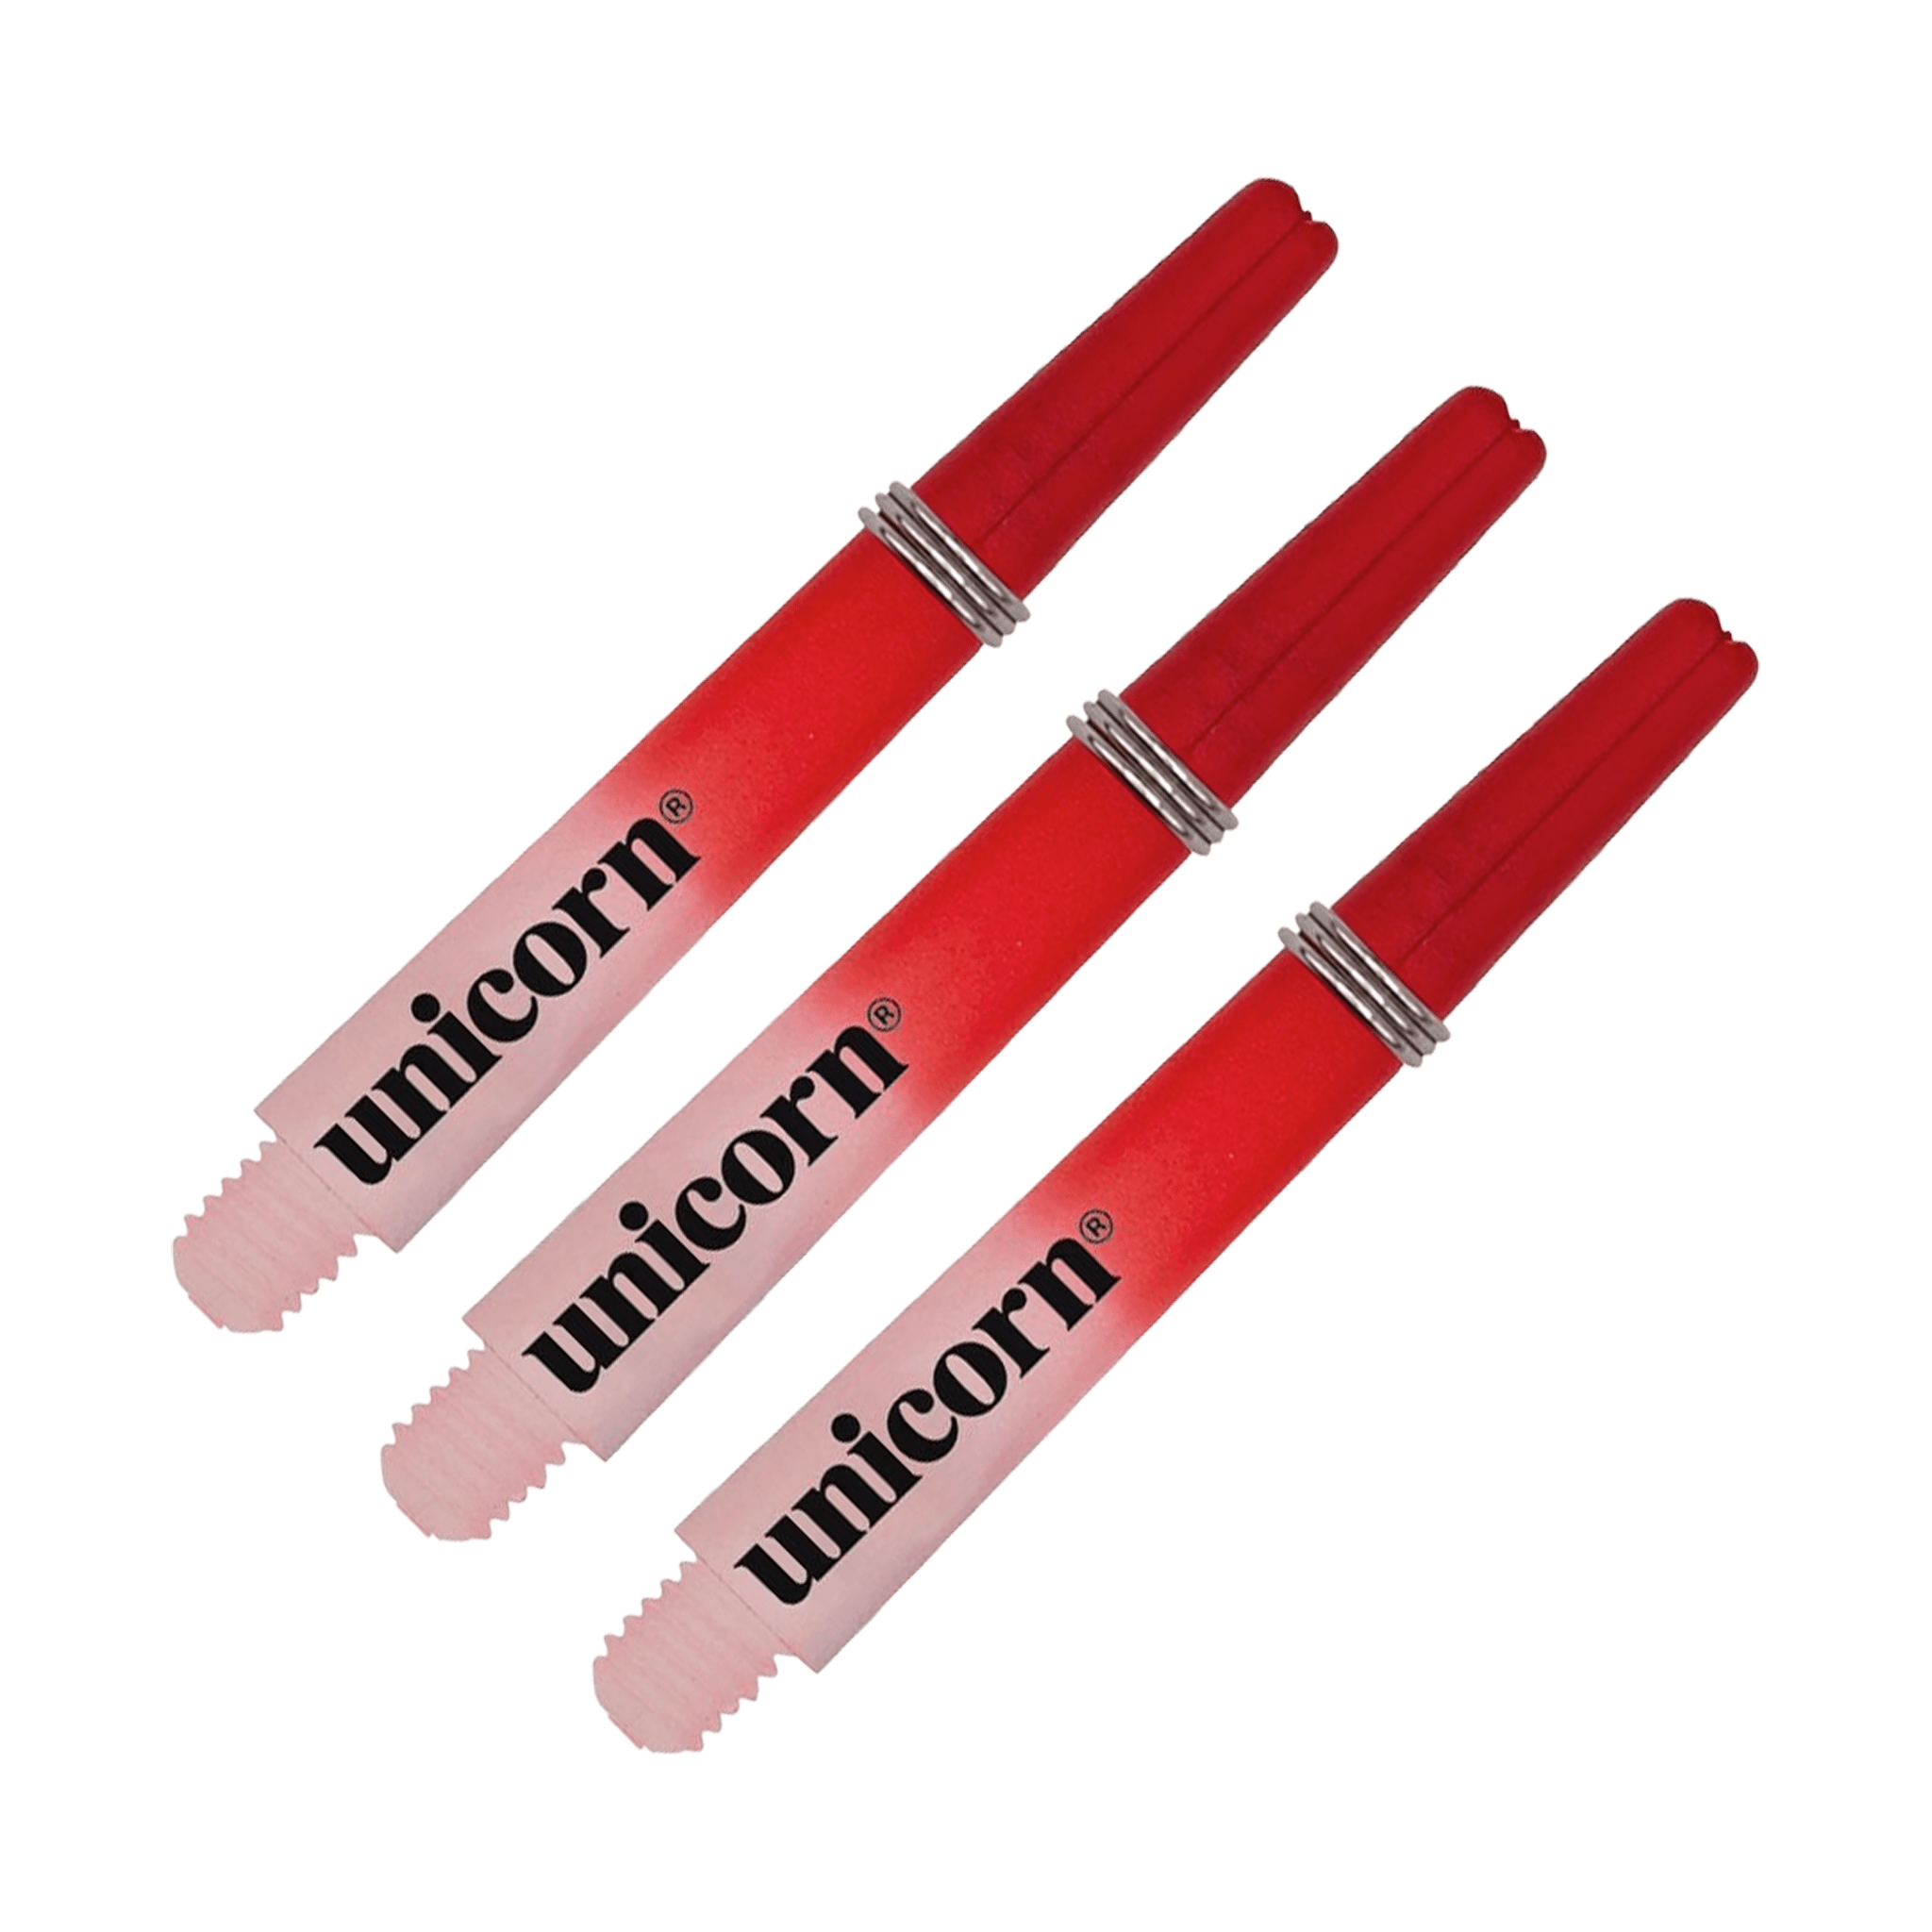 Unicorn Gripper 3 Two Tone Short (34.4 mm) Nylon Dart Shafts Red Shafts